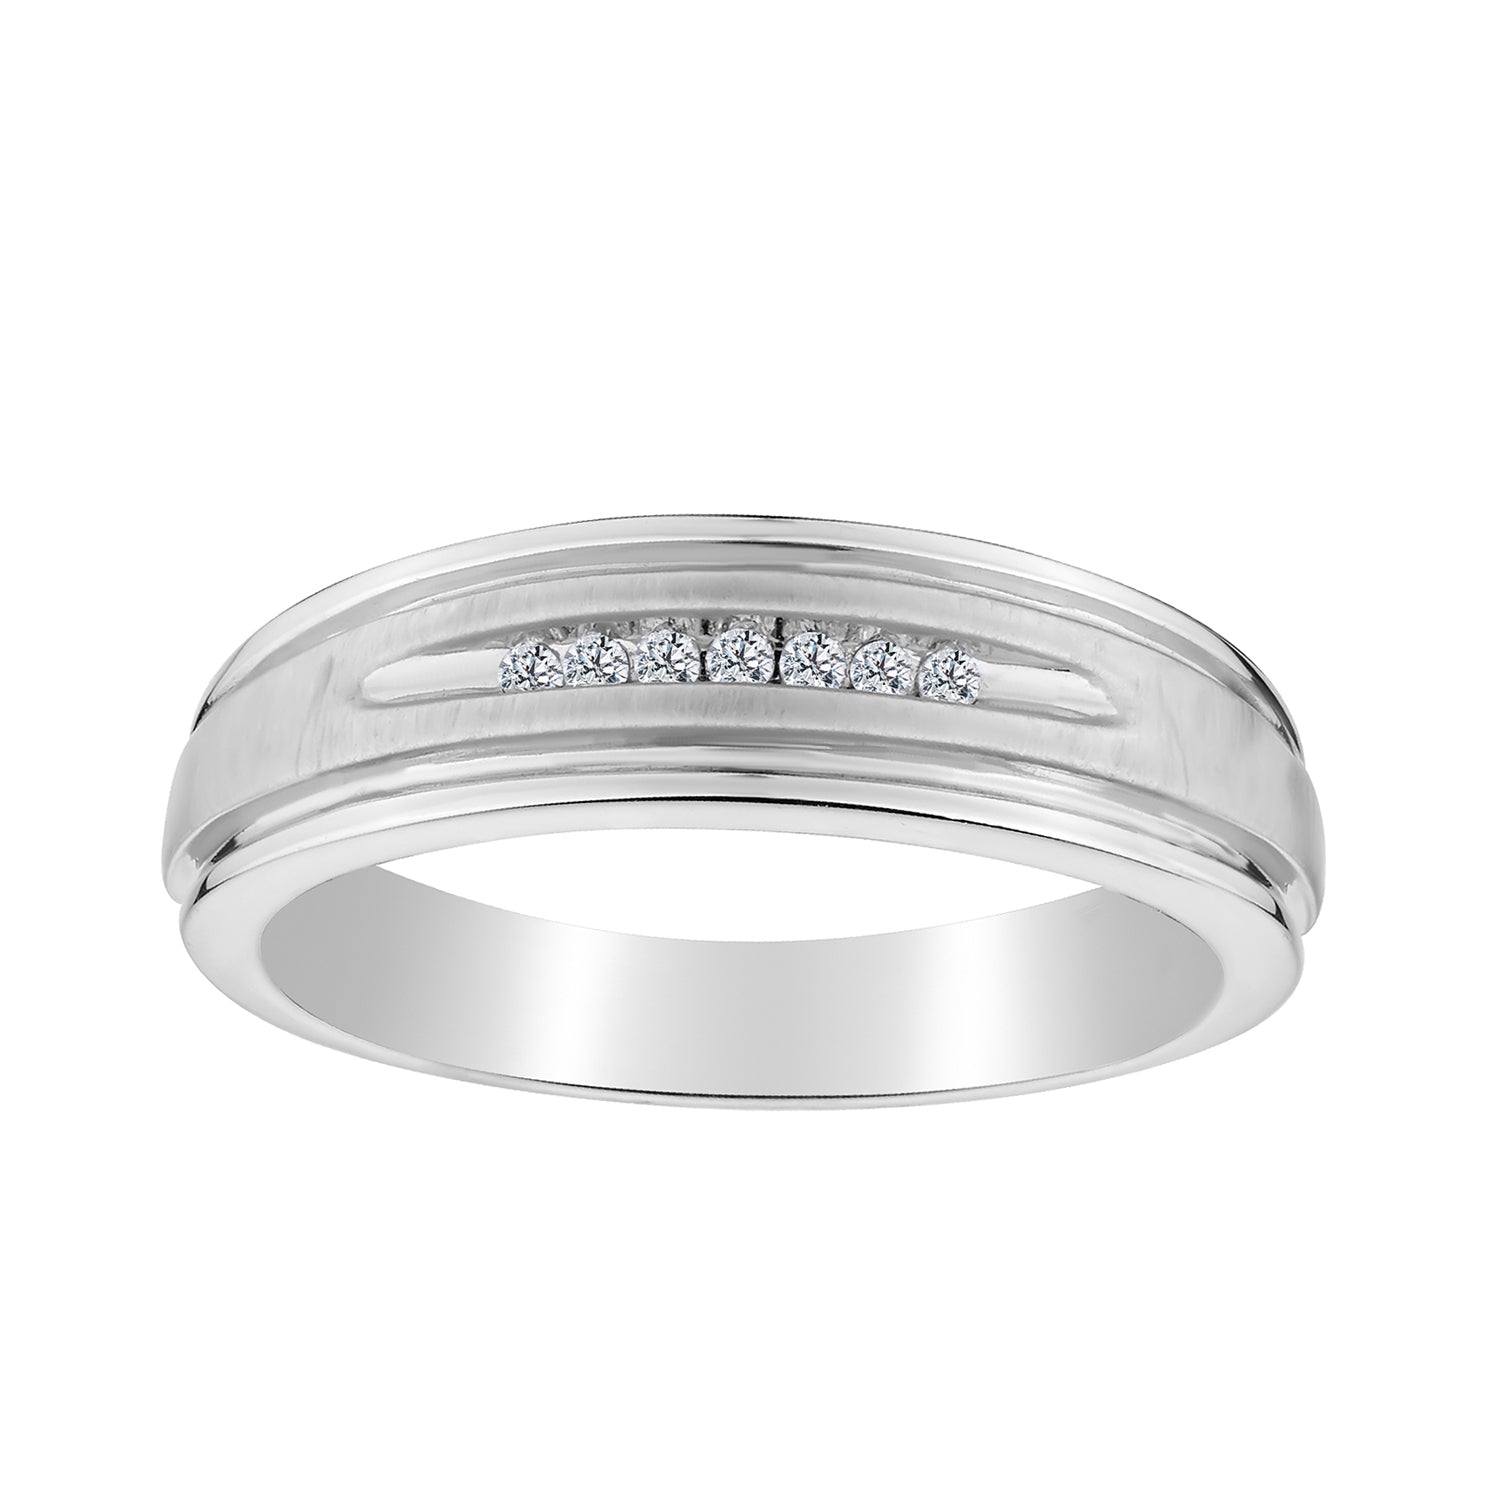 .10 Carat Diamond Gentleman's Ring,  10kt White Gold. Men’s Rings. Griffin Jewellery Designs. 